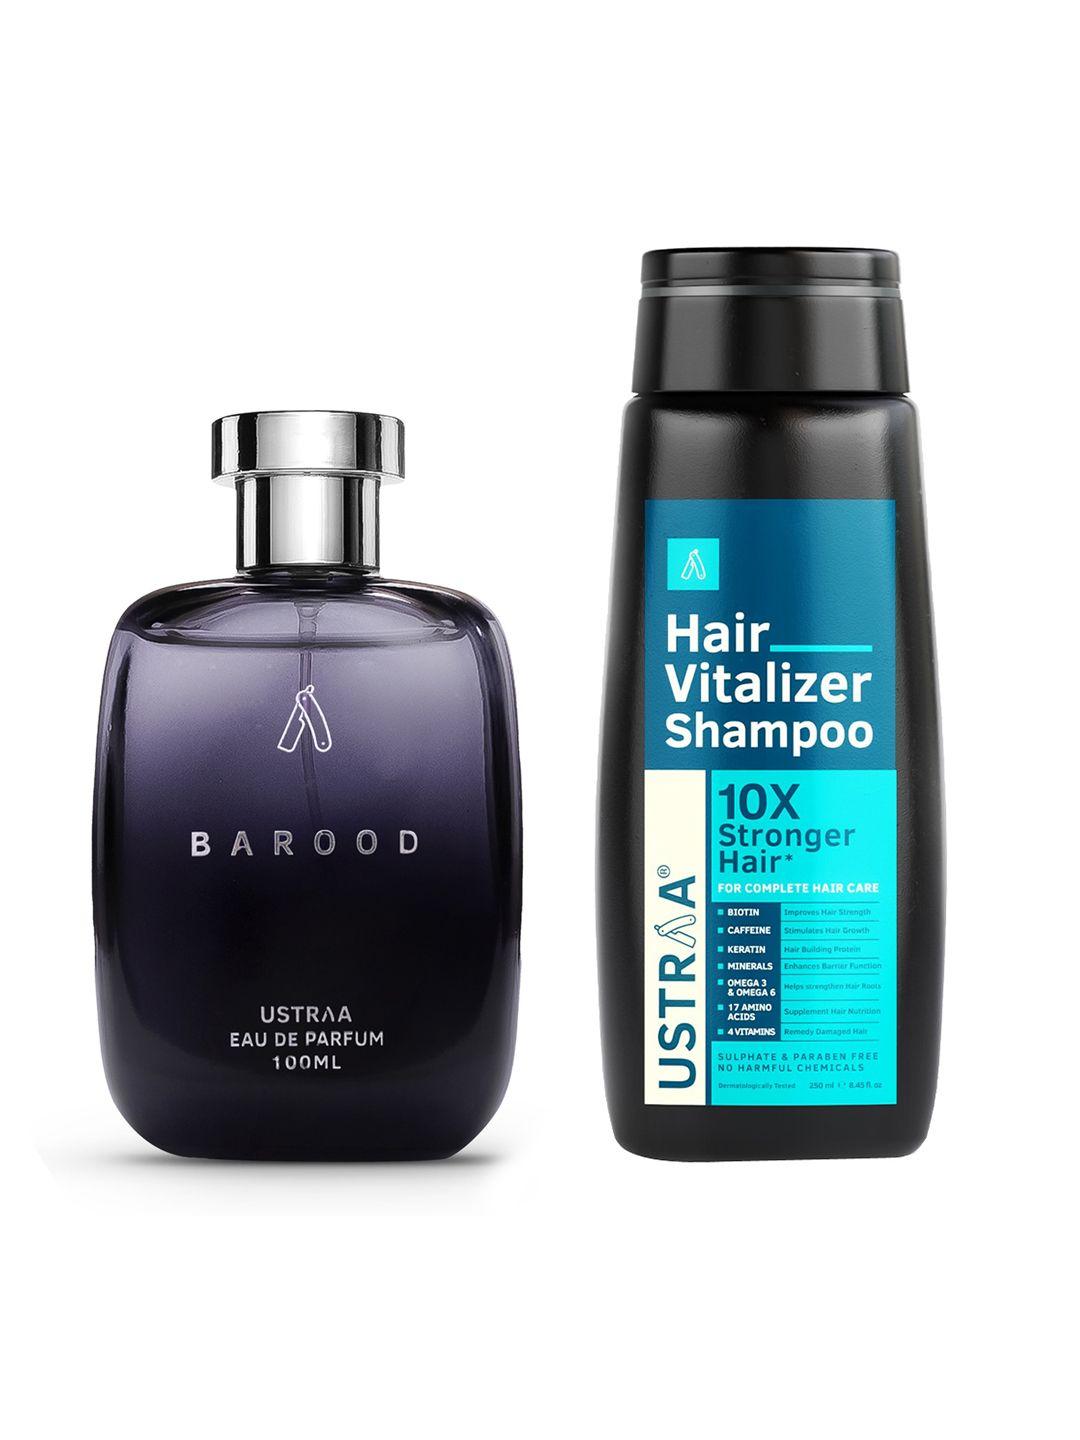 ustraa men set of barood eau de parfum 100 ml + 10x stronger hair vitalizer shampoo 250 ml